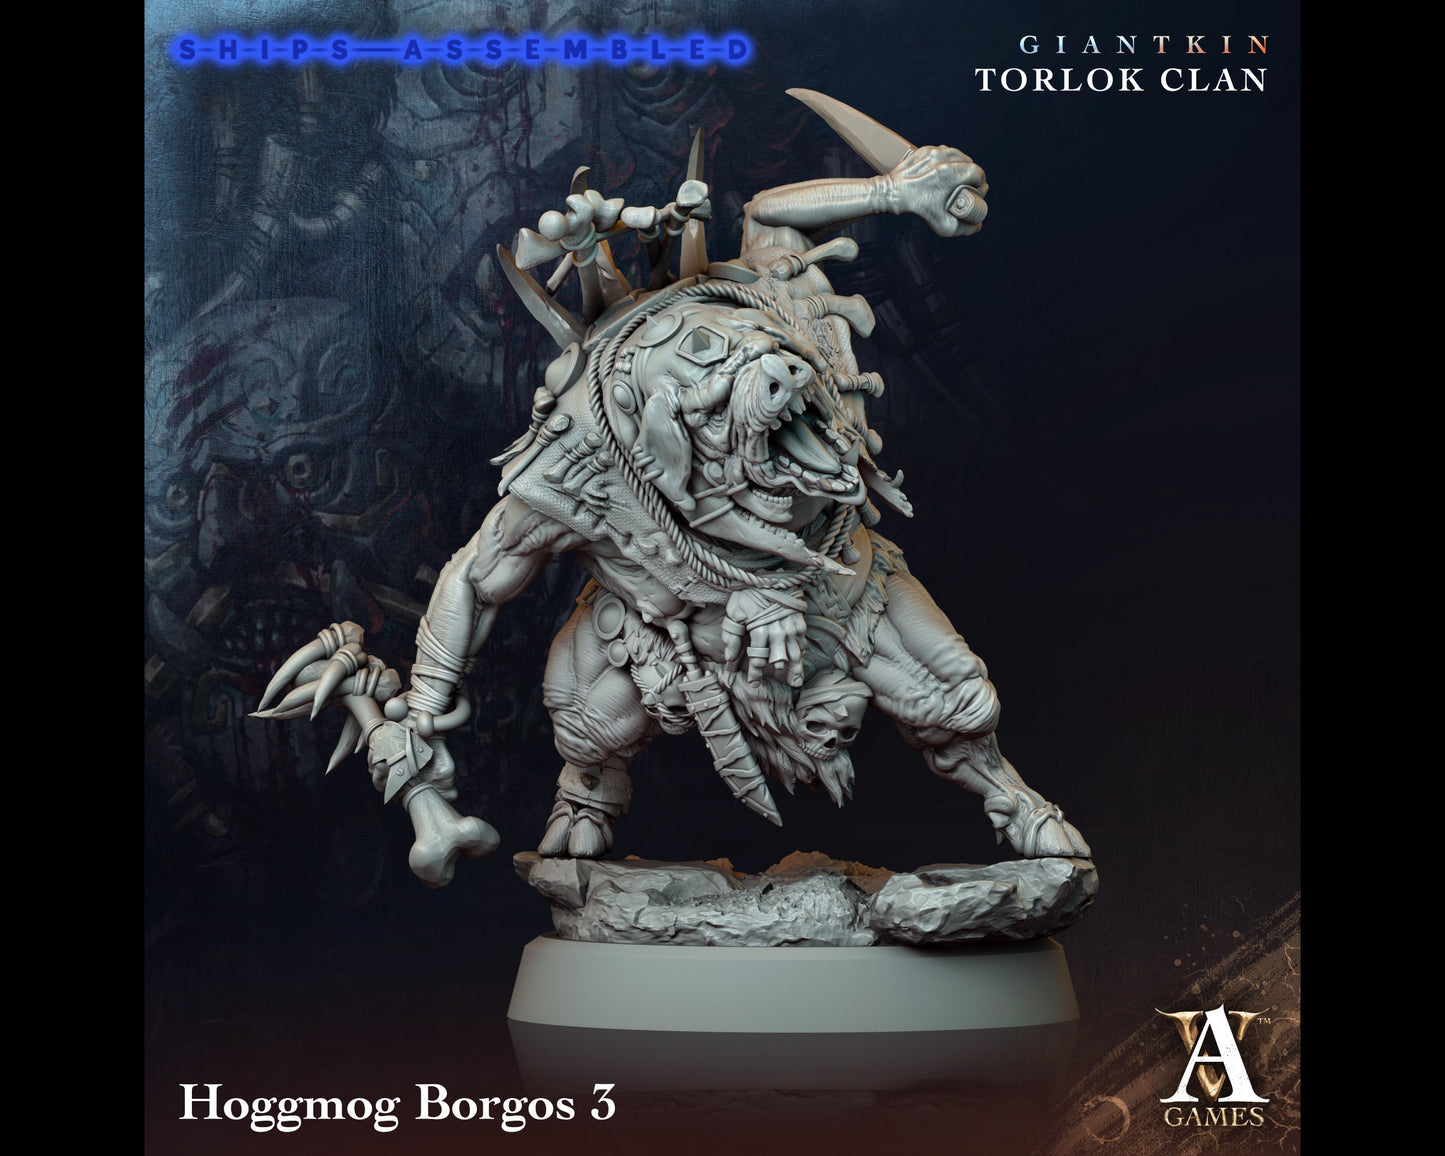 Hoggmog Borgos 3 - Giant Kin, Torlock Clan- Highly Detailed Resin 8k 3D Printed Miniature